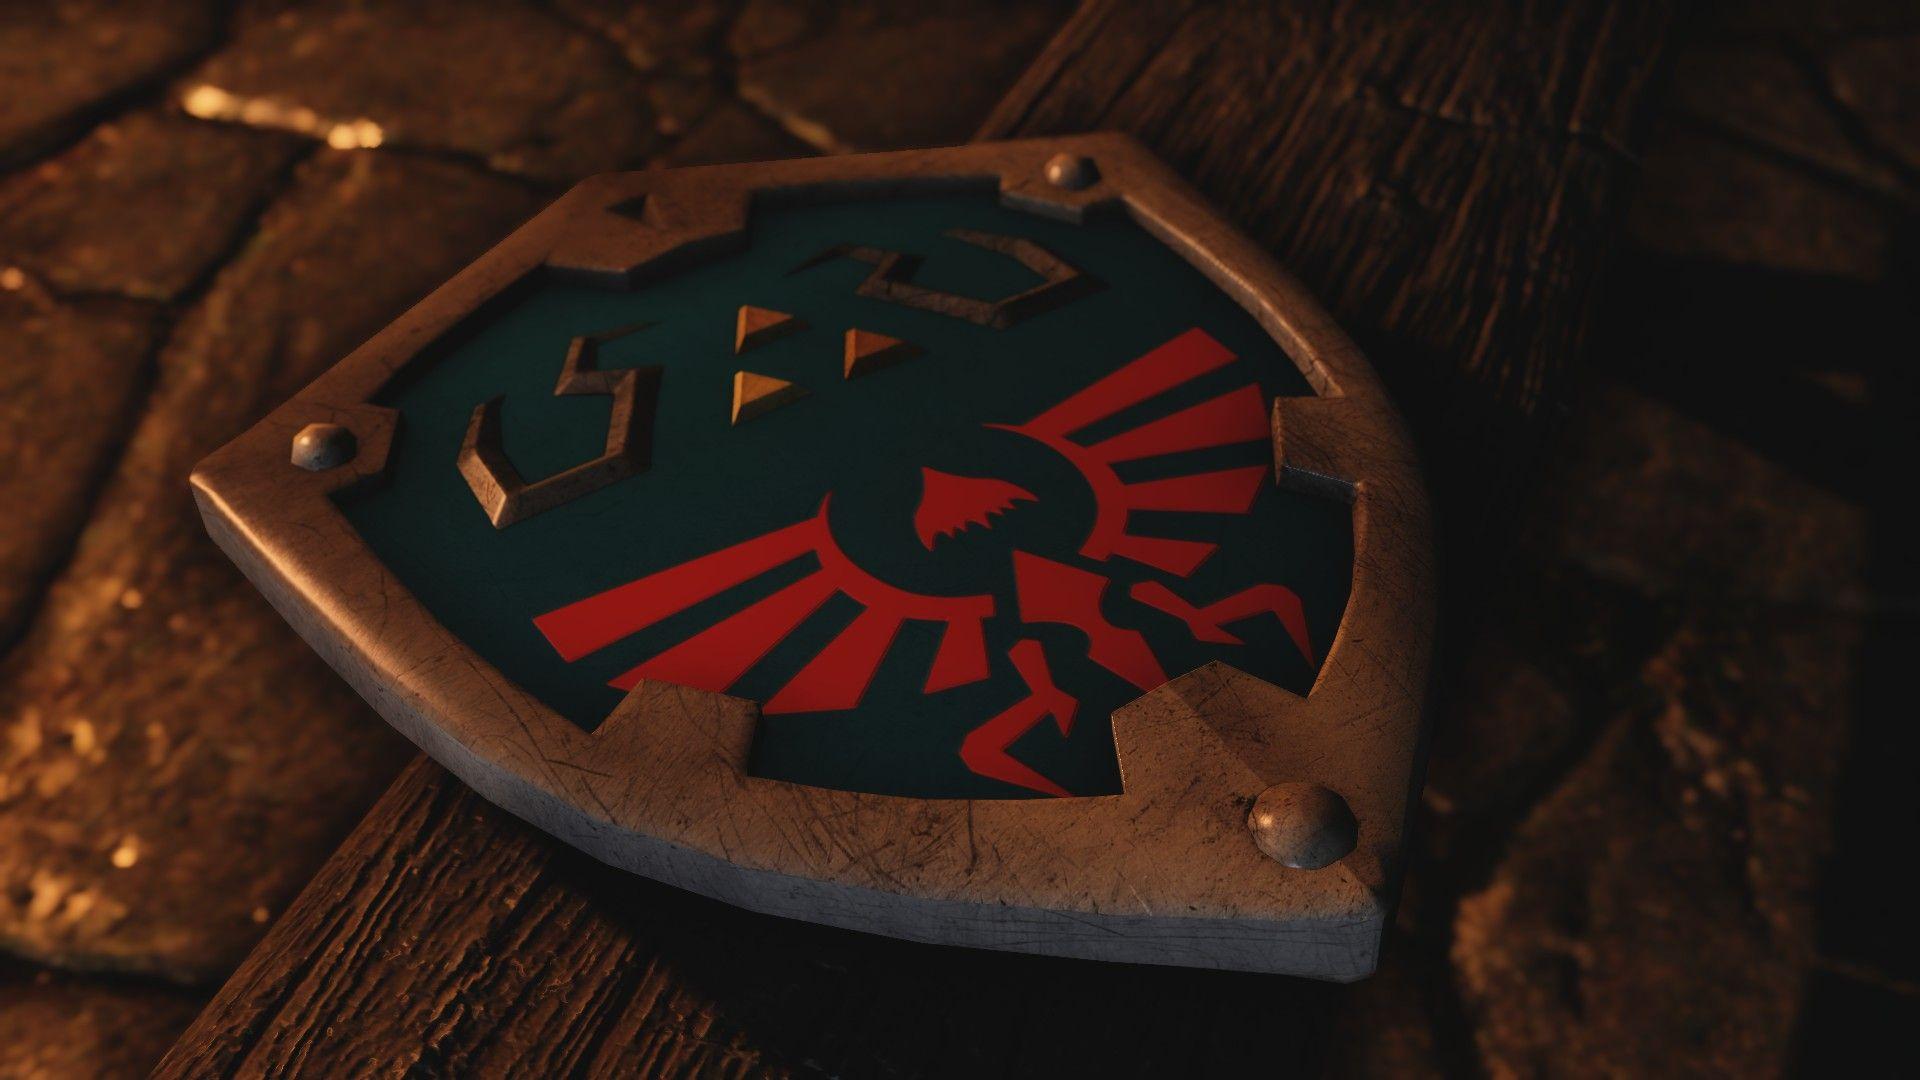 Hylian Shield image Legend of Zelda Project mod for Elder